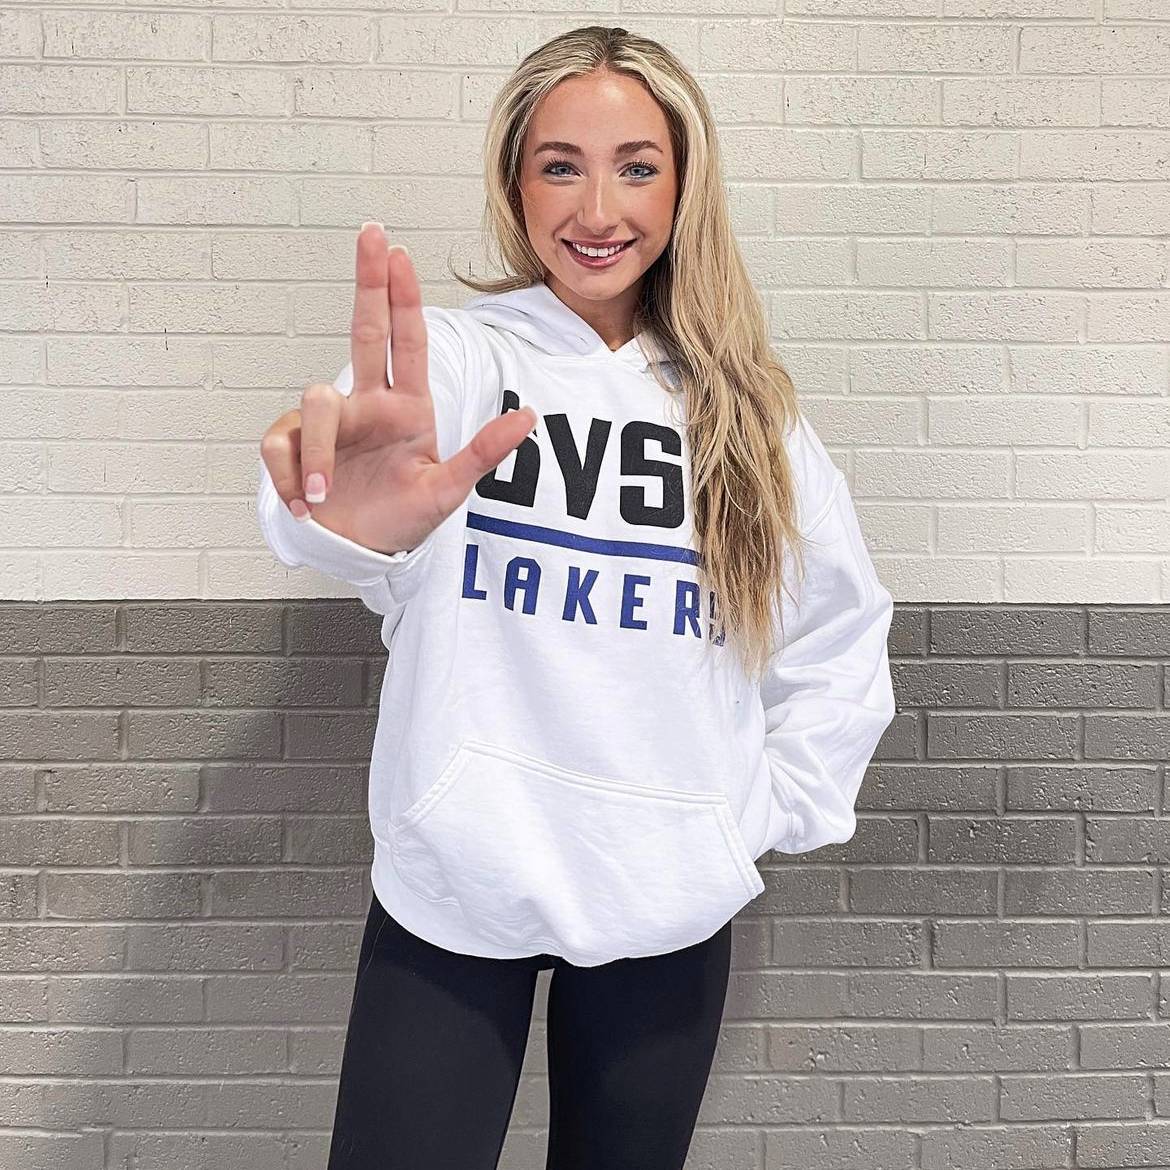 student wearing gvsu sweatshirt holding up the anchor sign